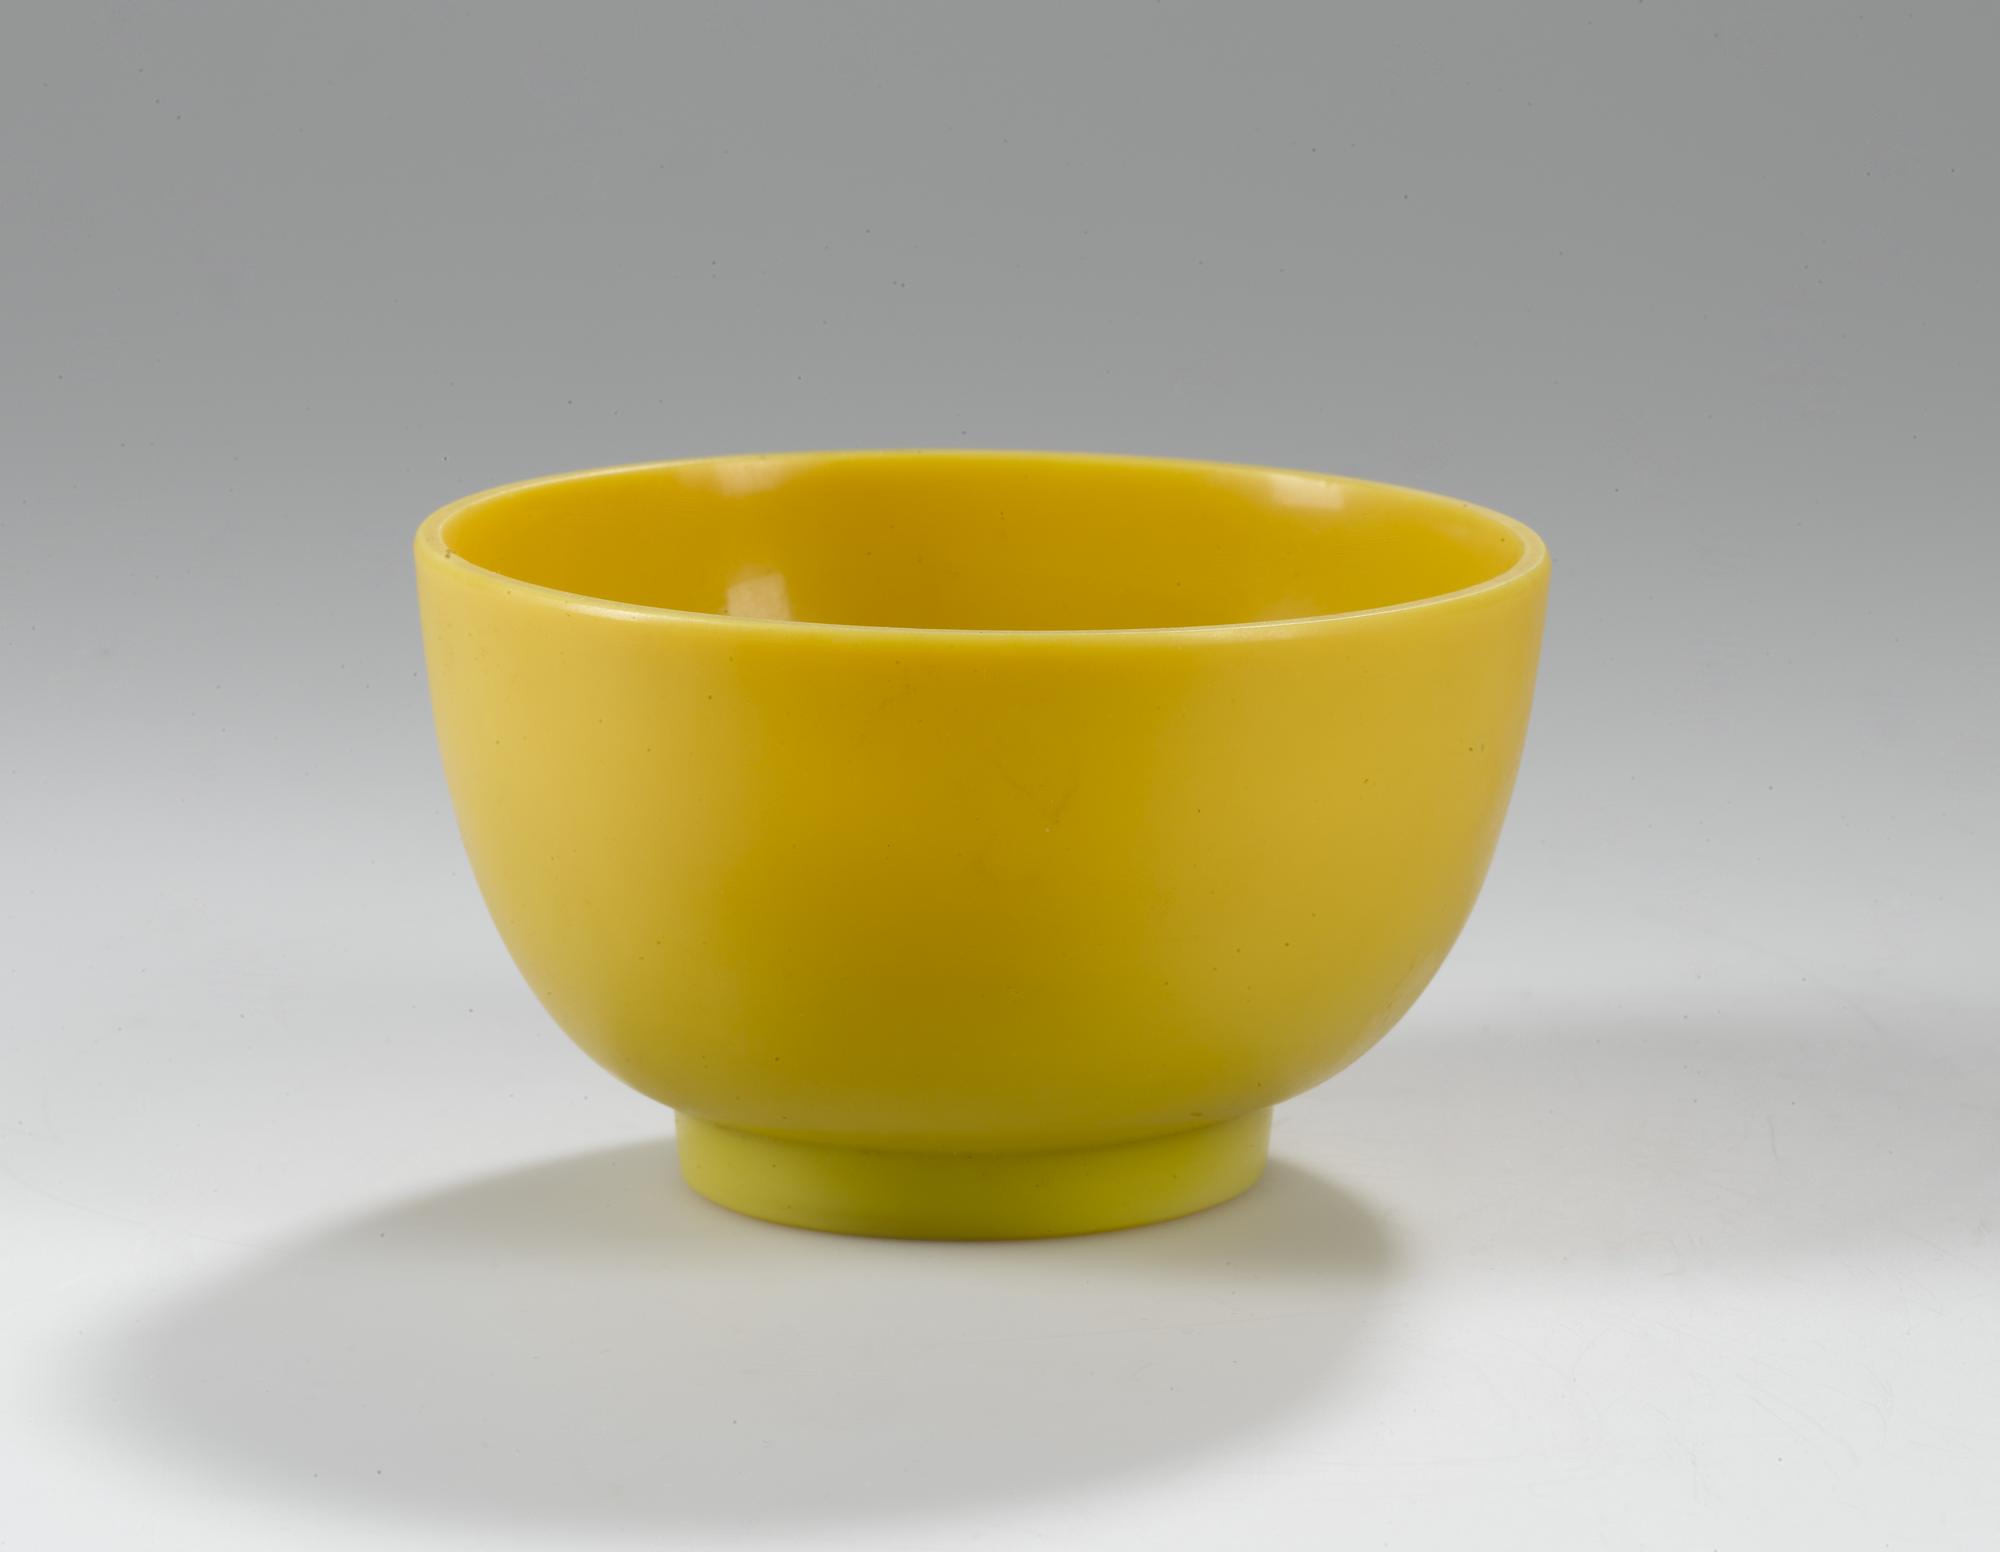 ceramics-yellowbowl.jpg